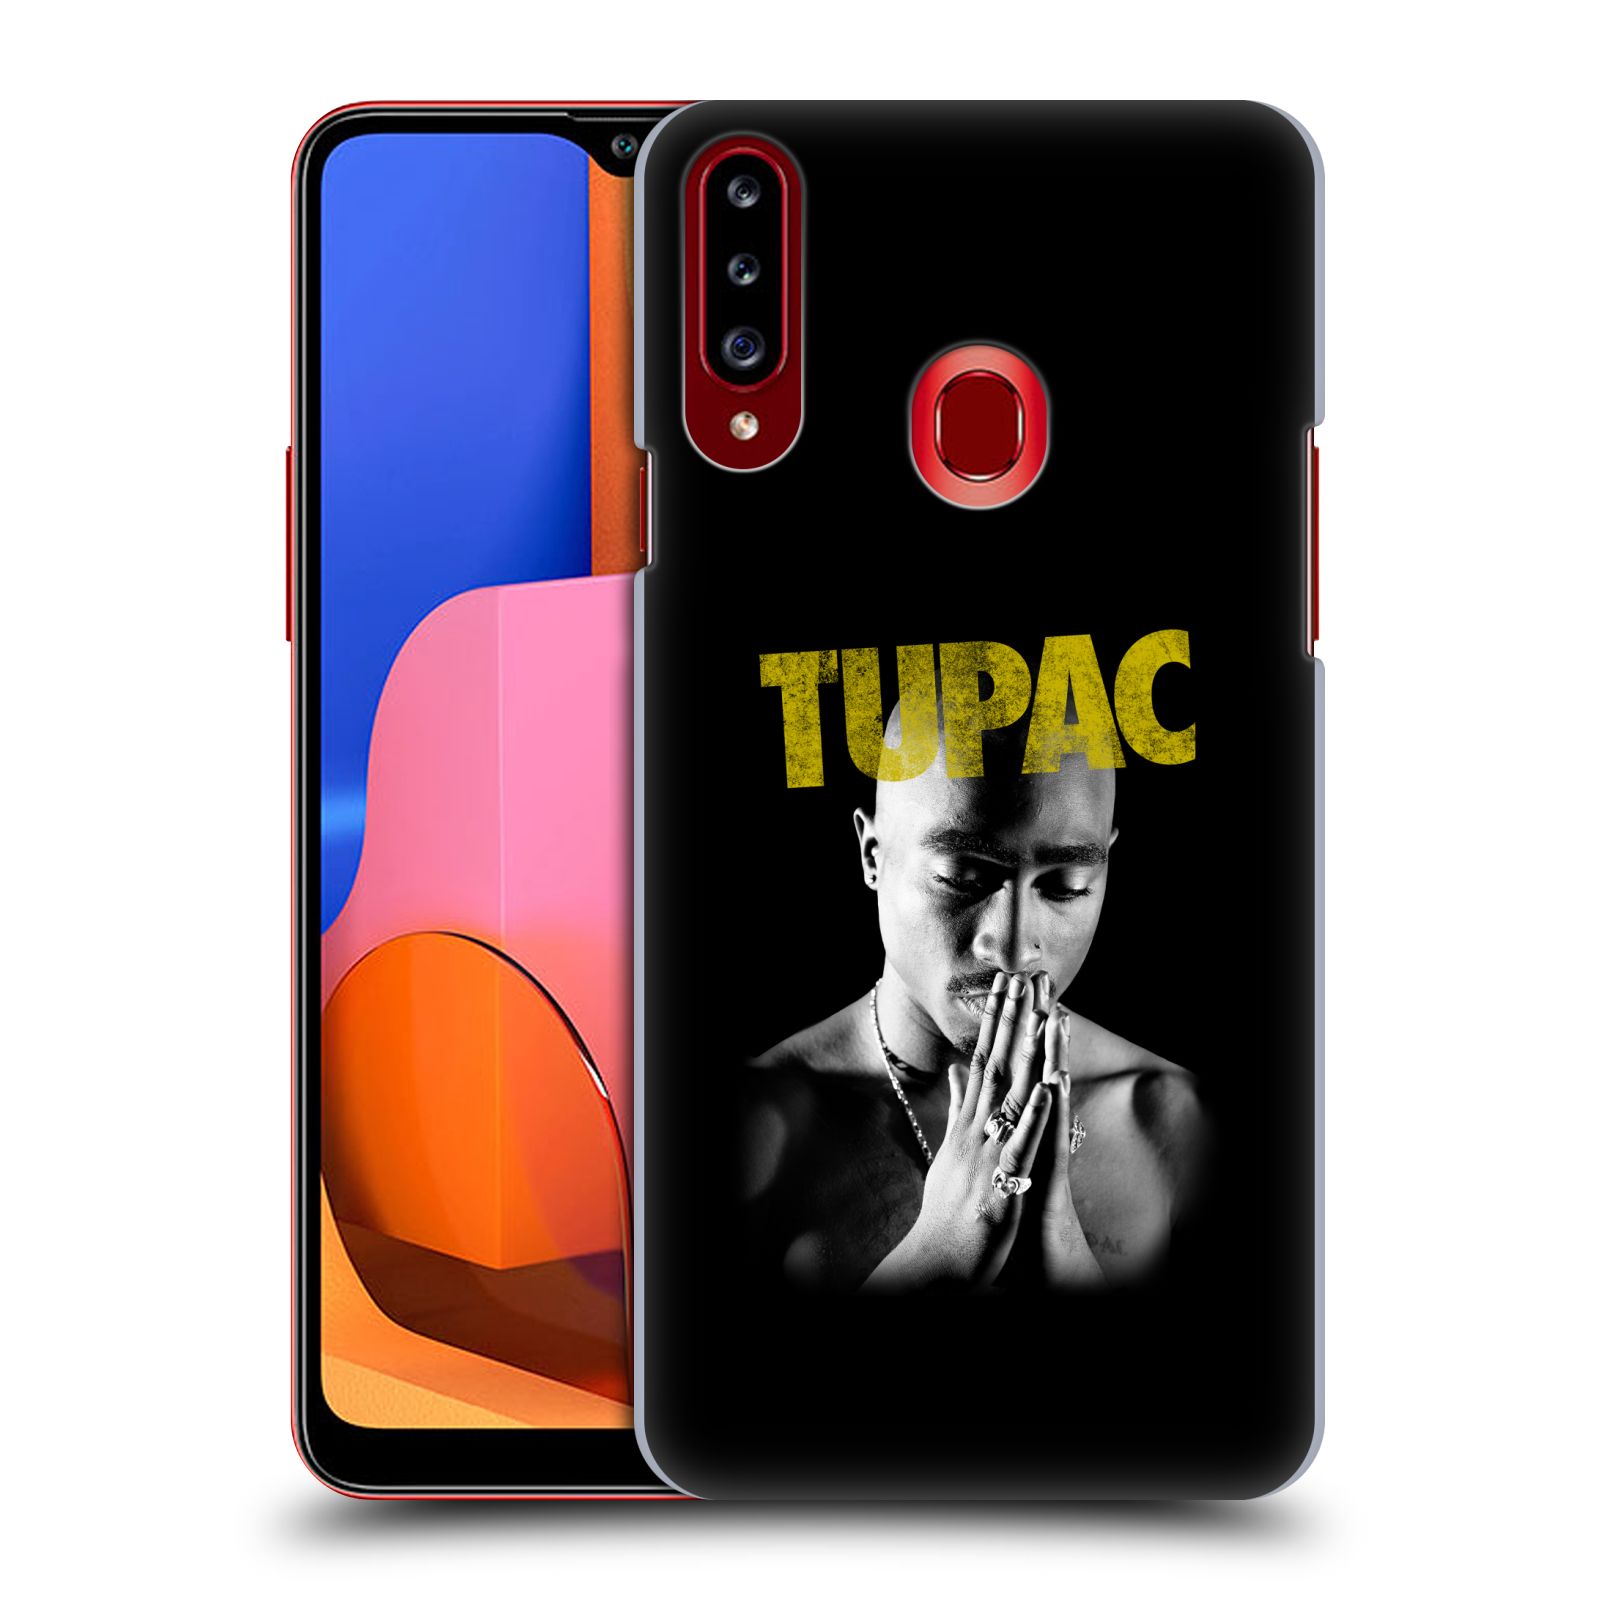 HEAD CASE plastový obal na mobil Samsung Galaxy A20s Zpěvák rapper Tupac Shakur 2Pac zlatý nadpis